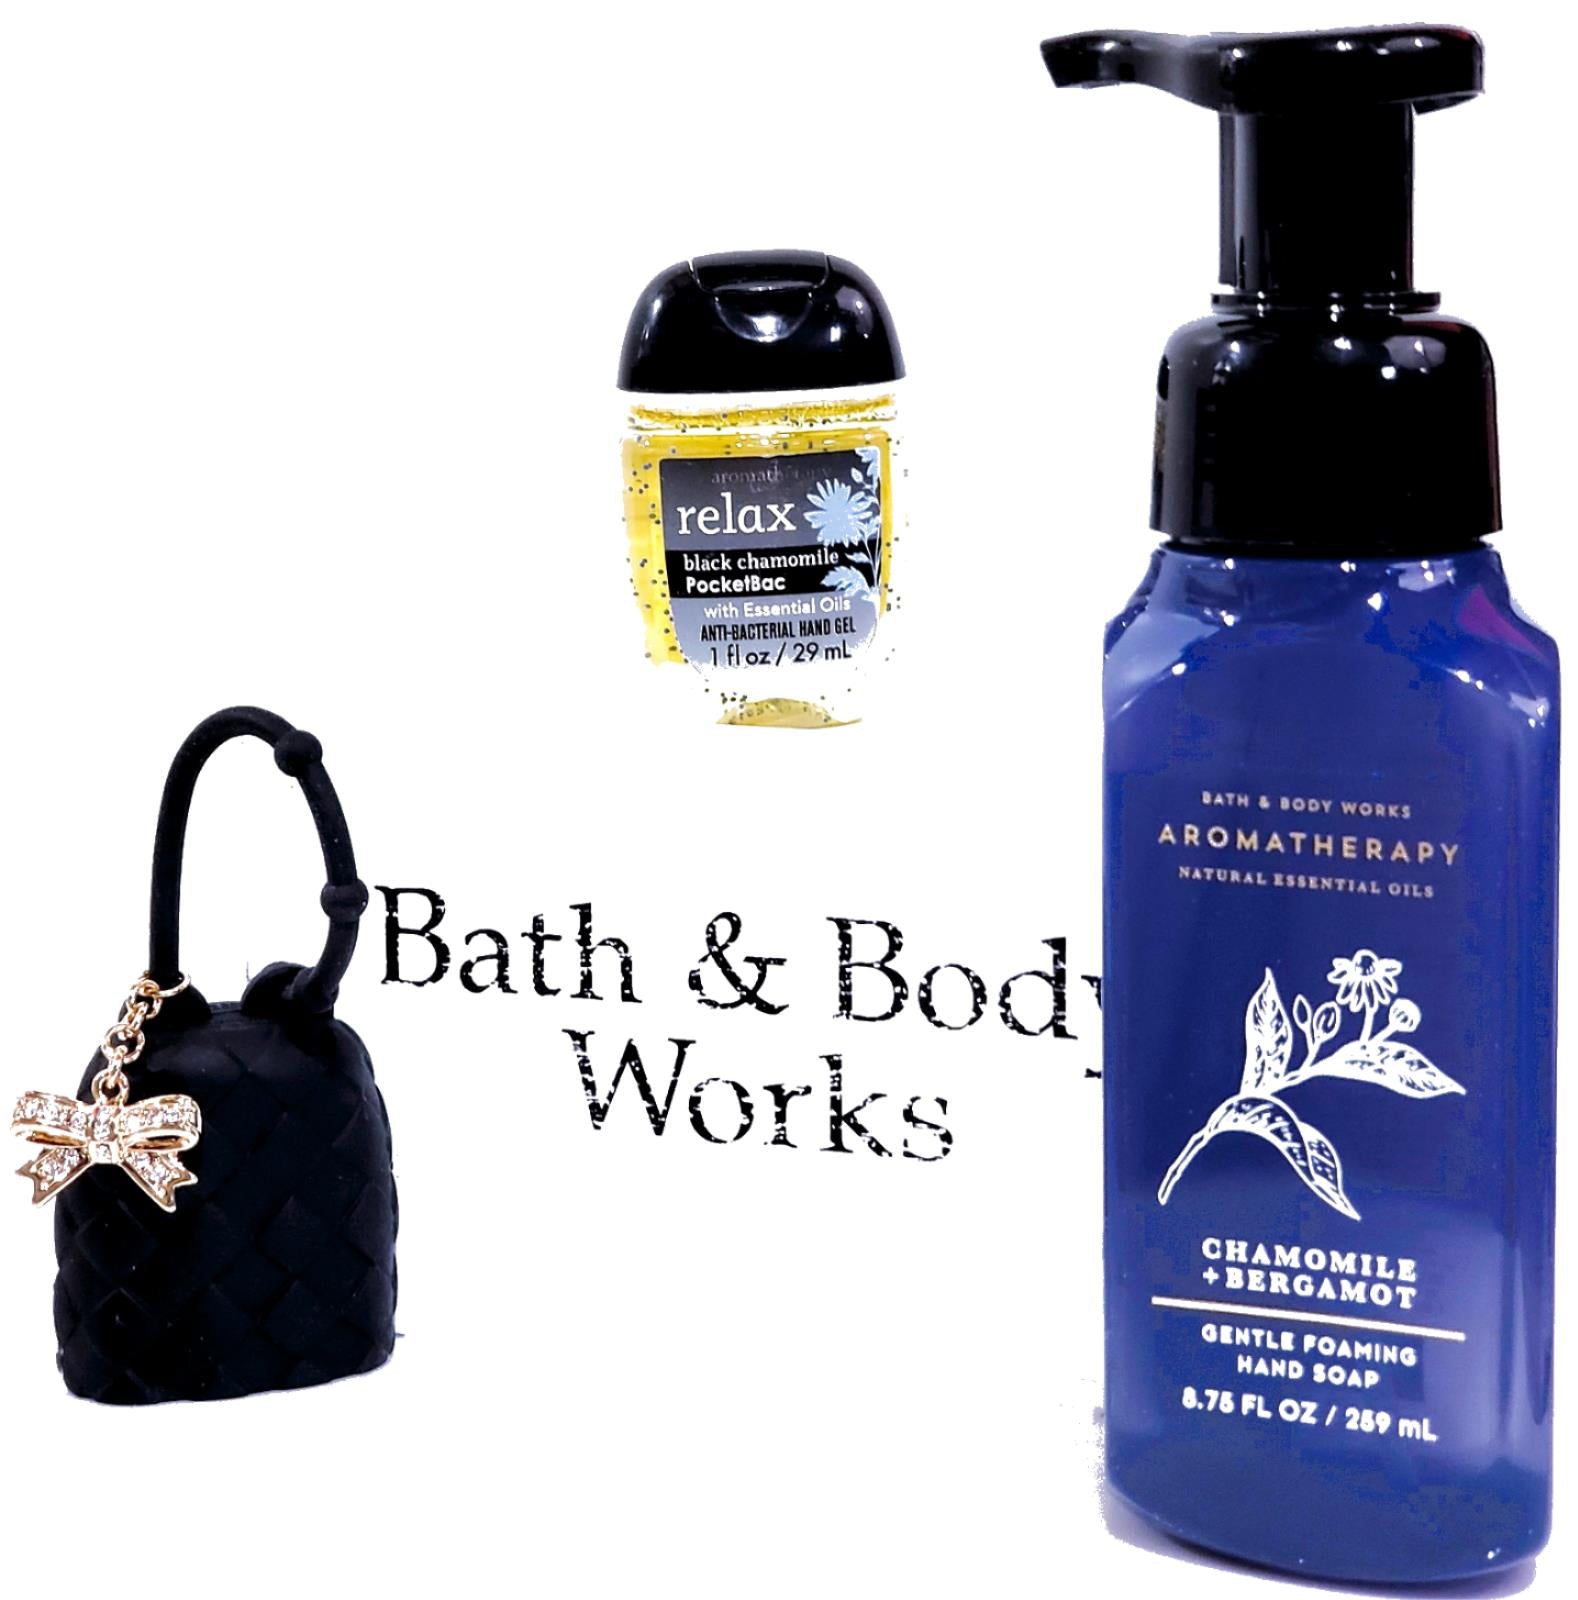 Bath & Body Works Anti-Bacterial Hand Gel - Cactus Blossom - Reviews